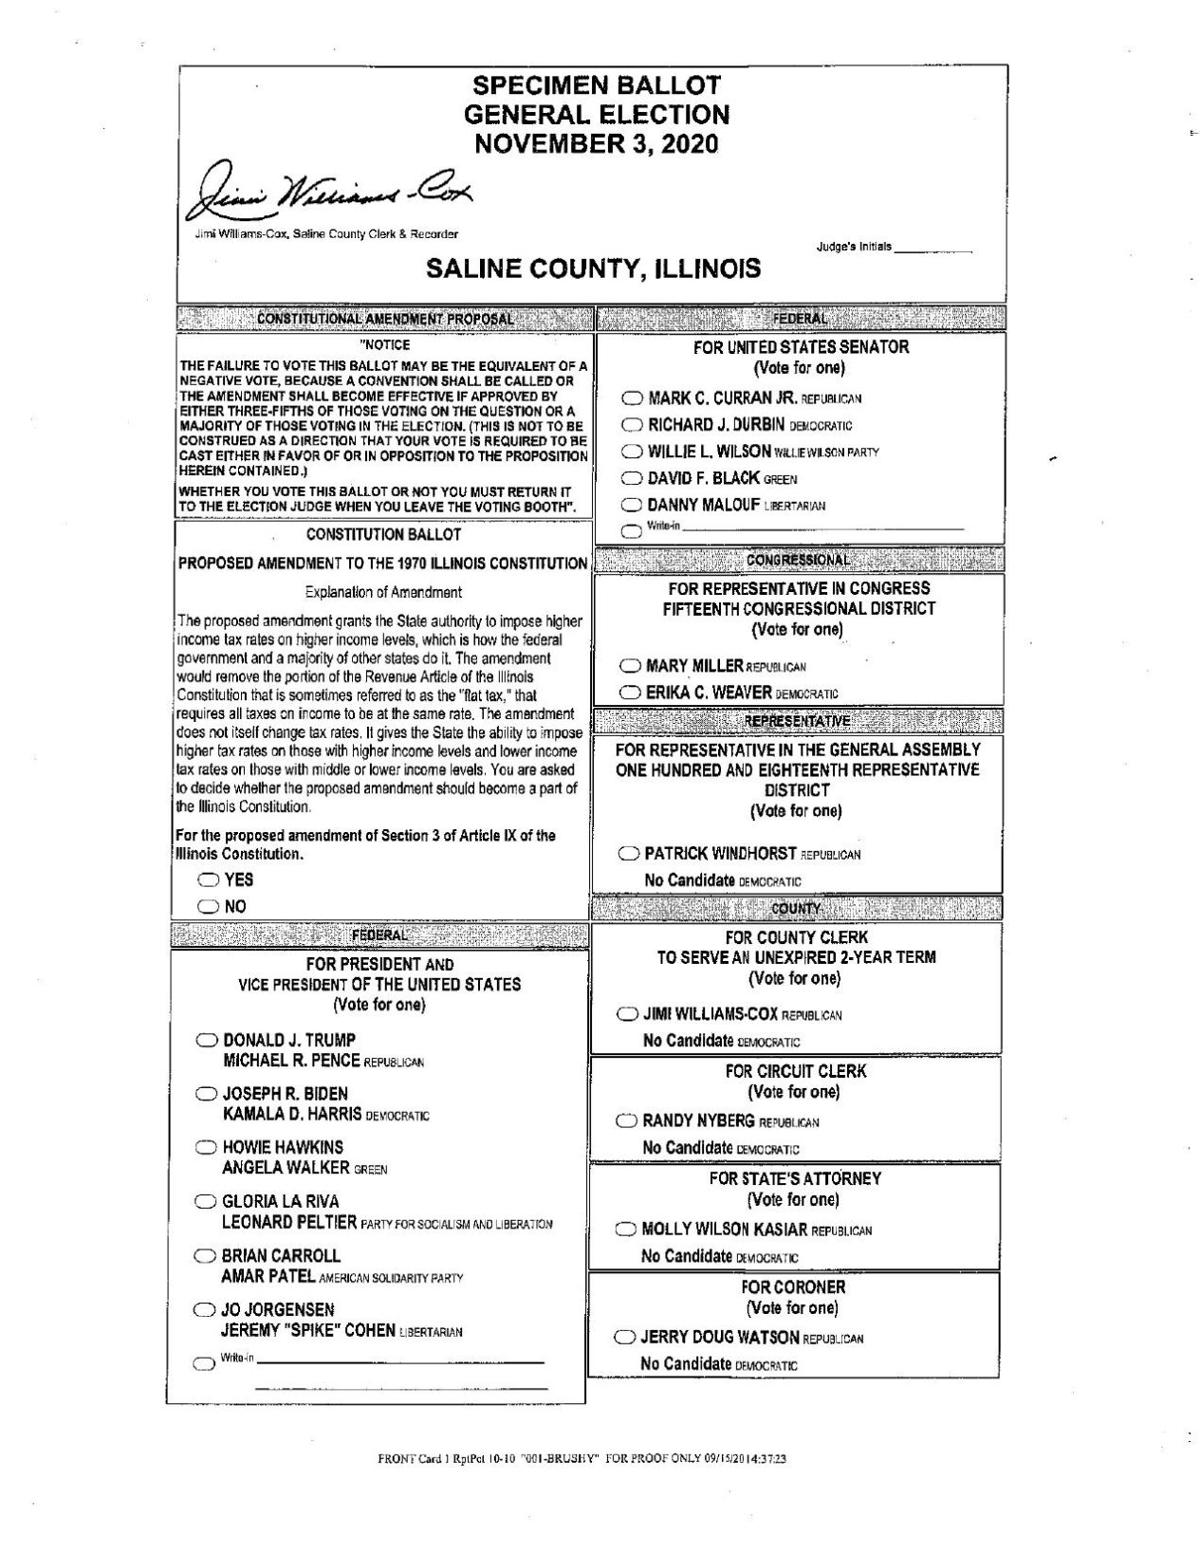 SALINE COUNTY BALLOT.pdf WPSD Local 6